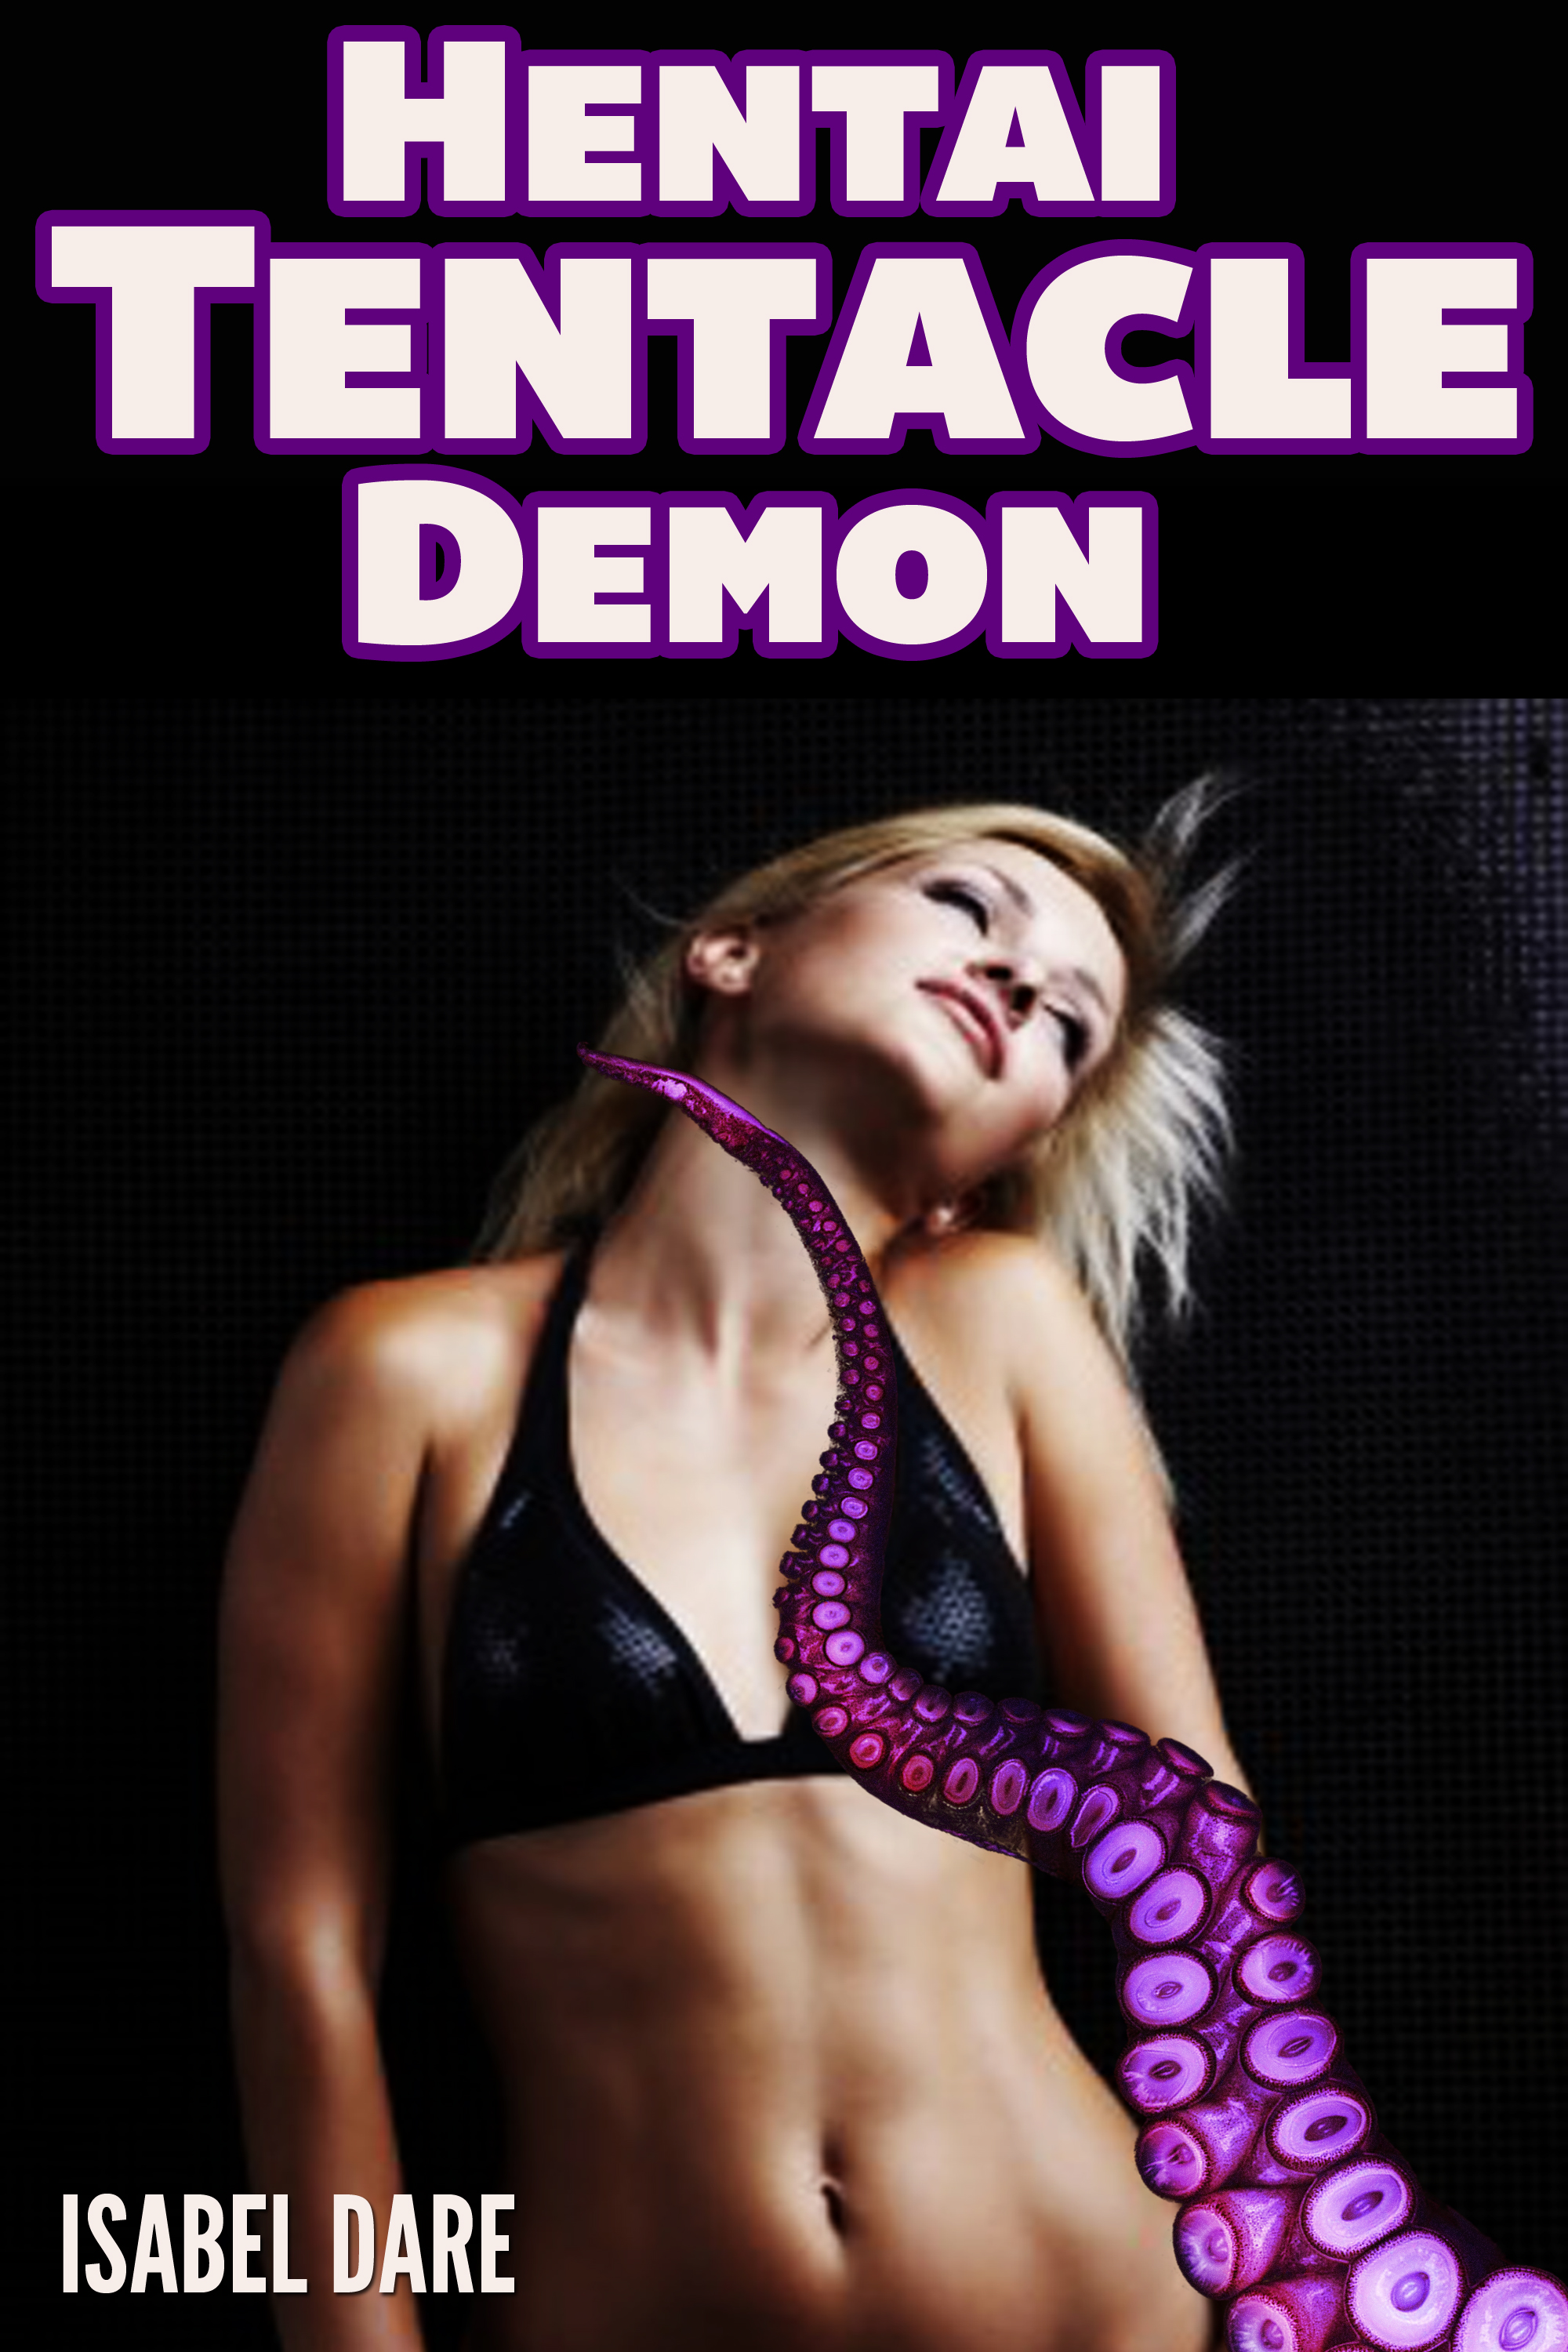 Hentai Tentacle Demon (Tentacle Monster Erotica), an Ebook by Isabel Dare